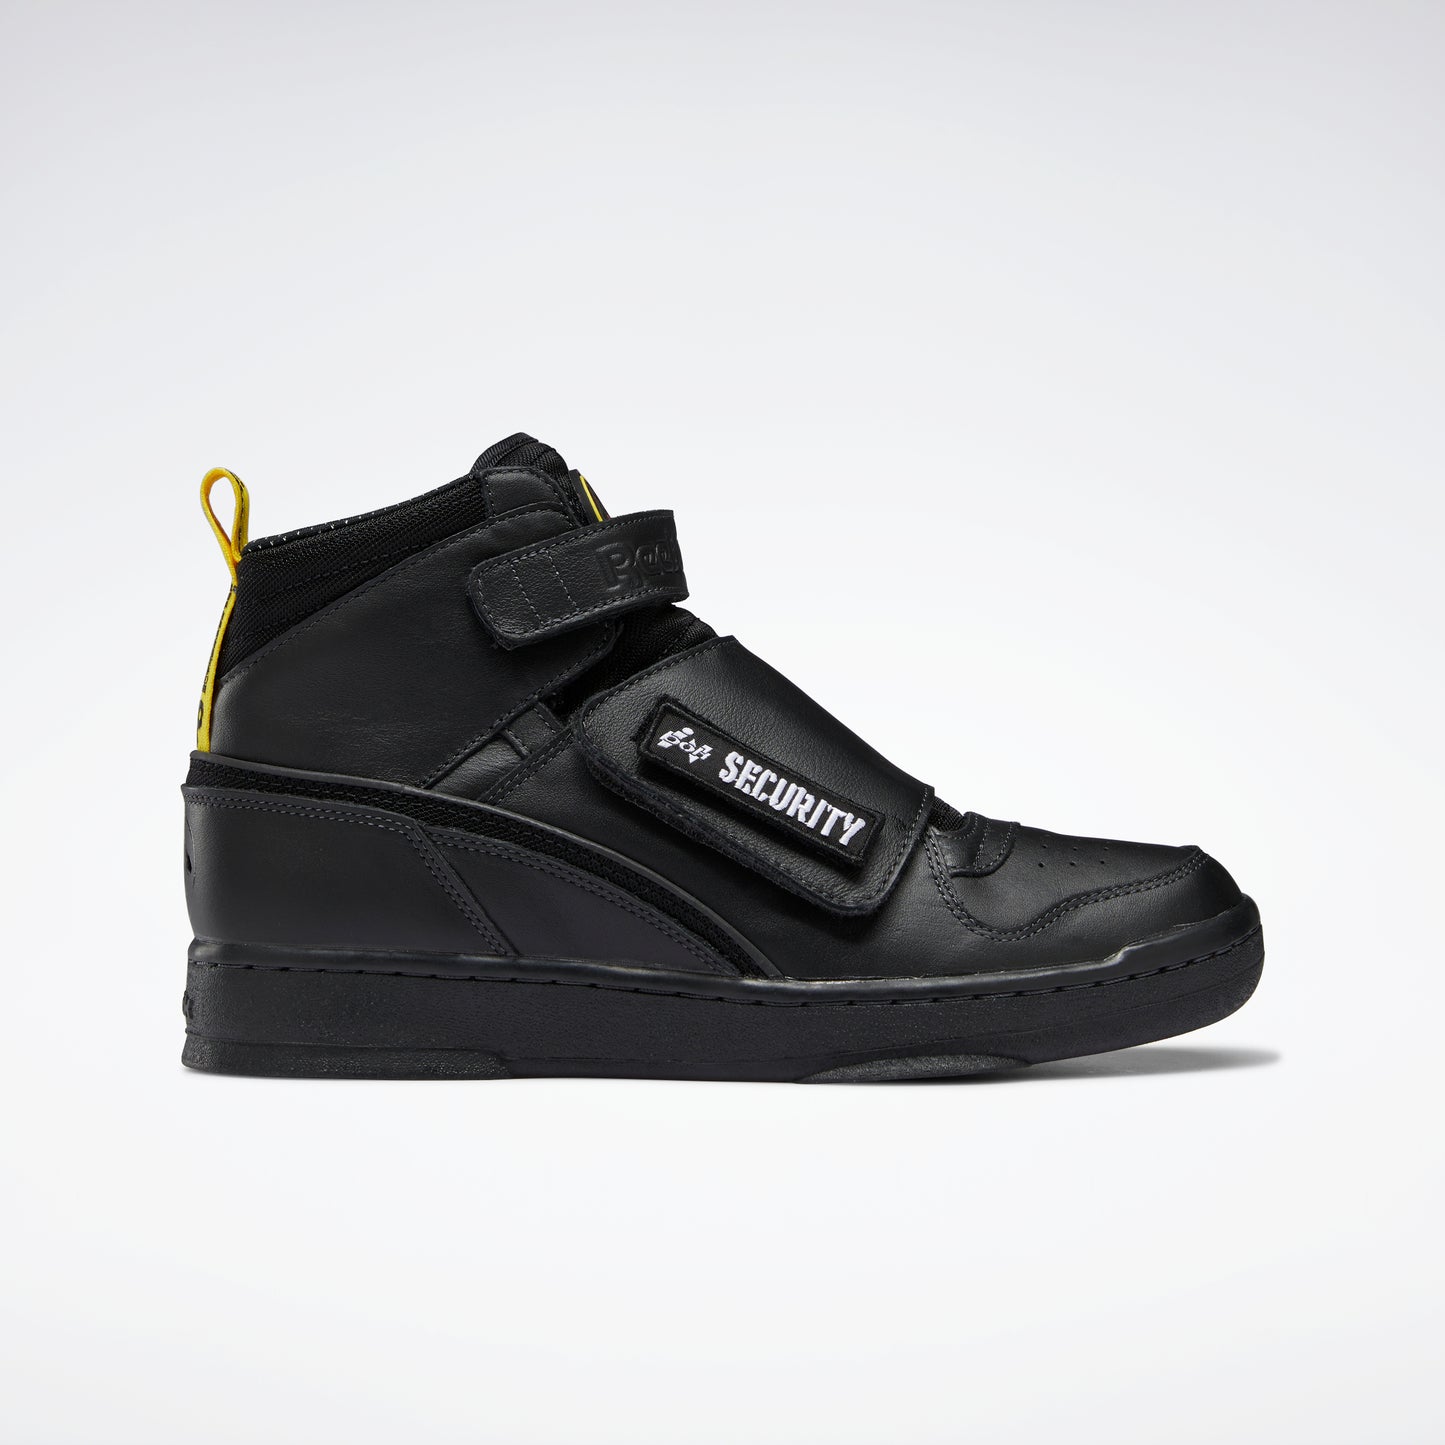 Reebok Footwear Men Jurassic Park Stomper Shoes Coal/Black/Blayel